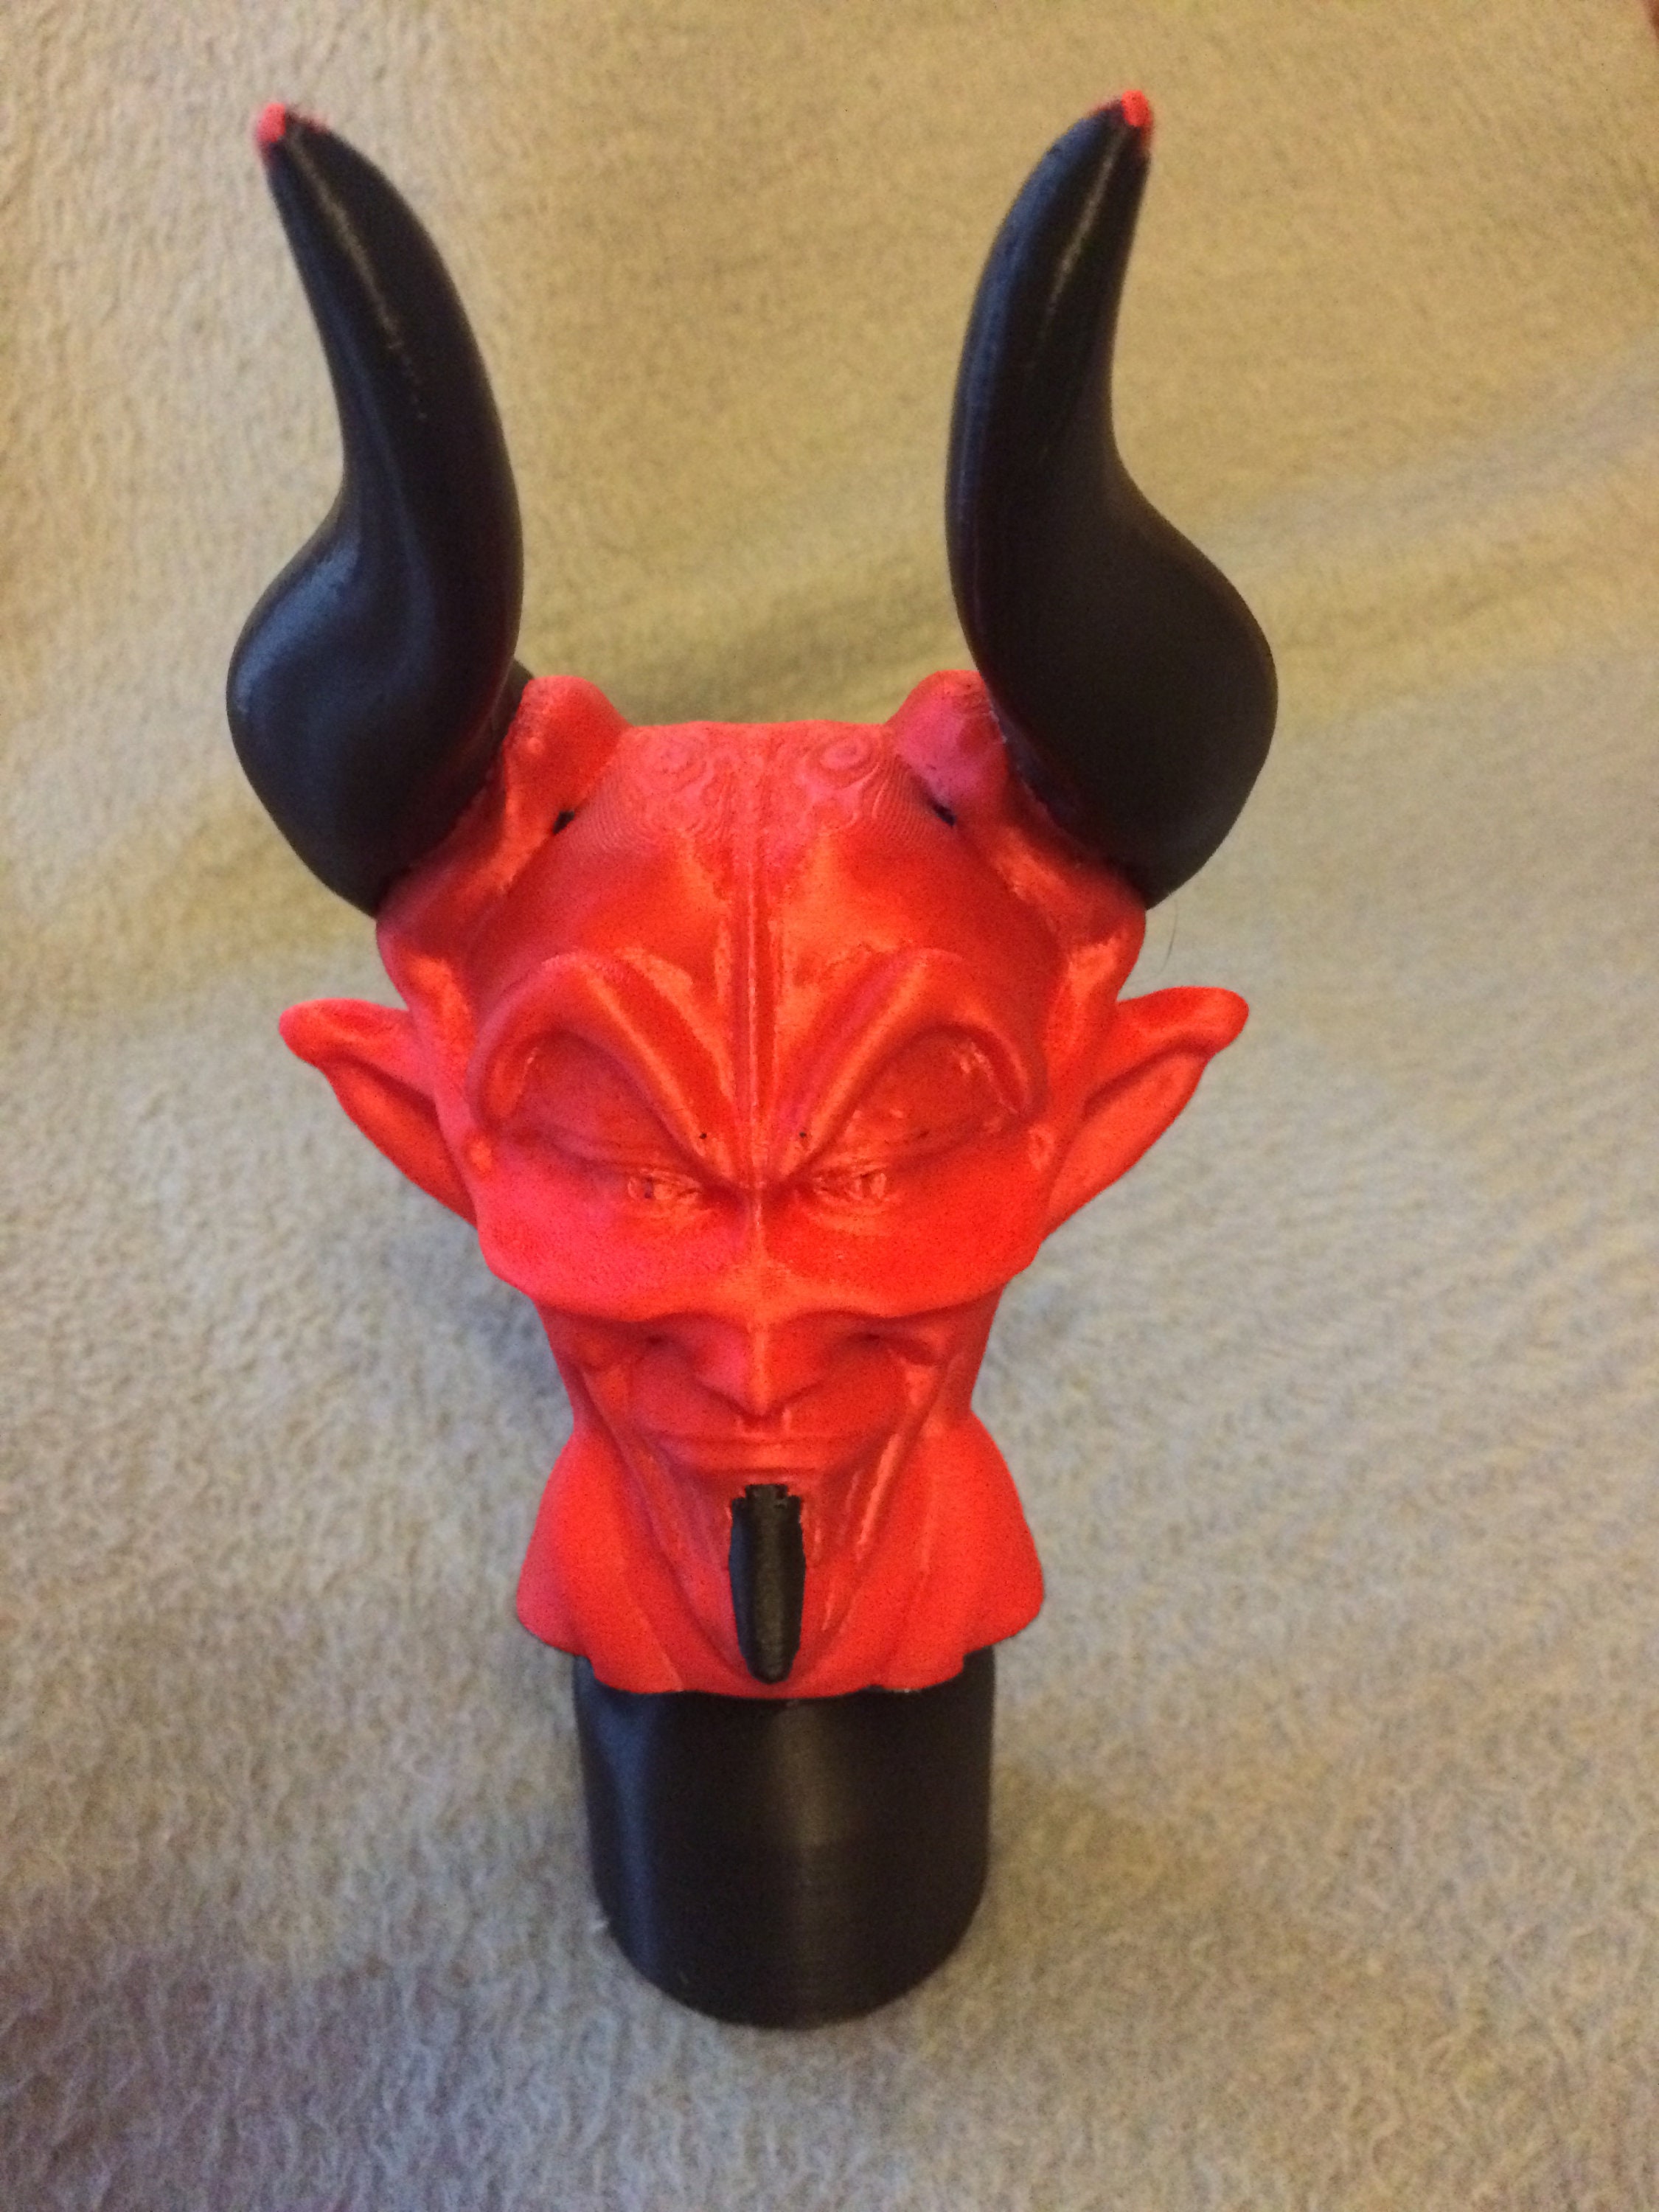 Devil Horns Headband Red - Champion Party Supply